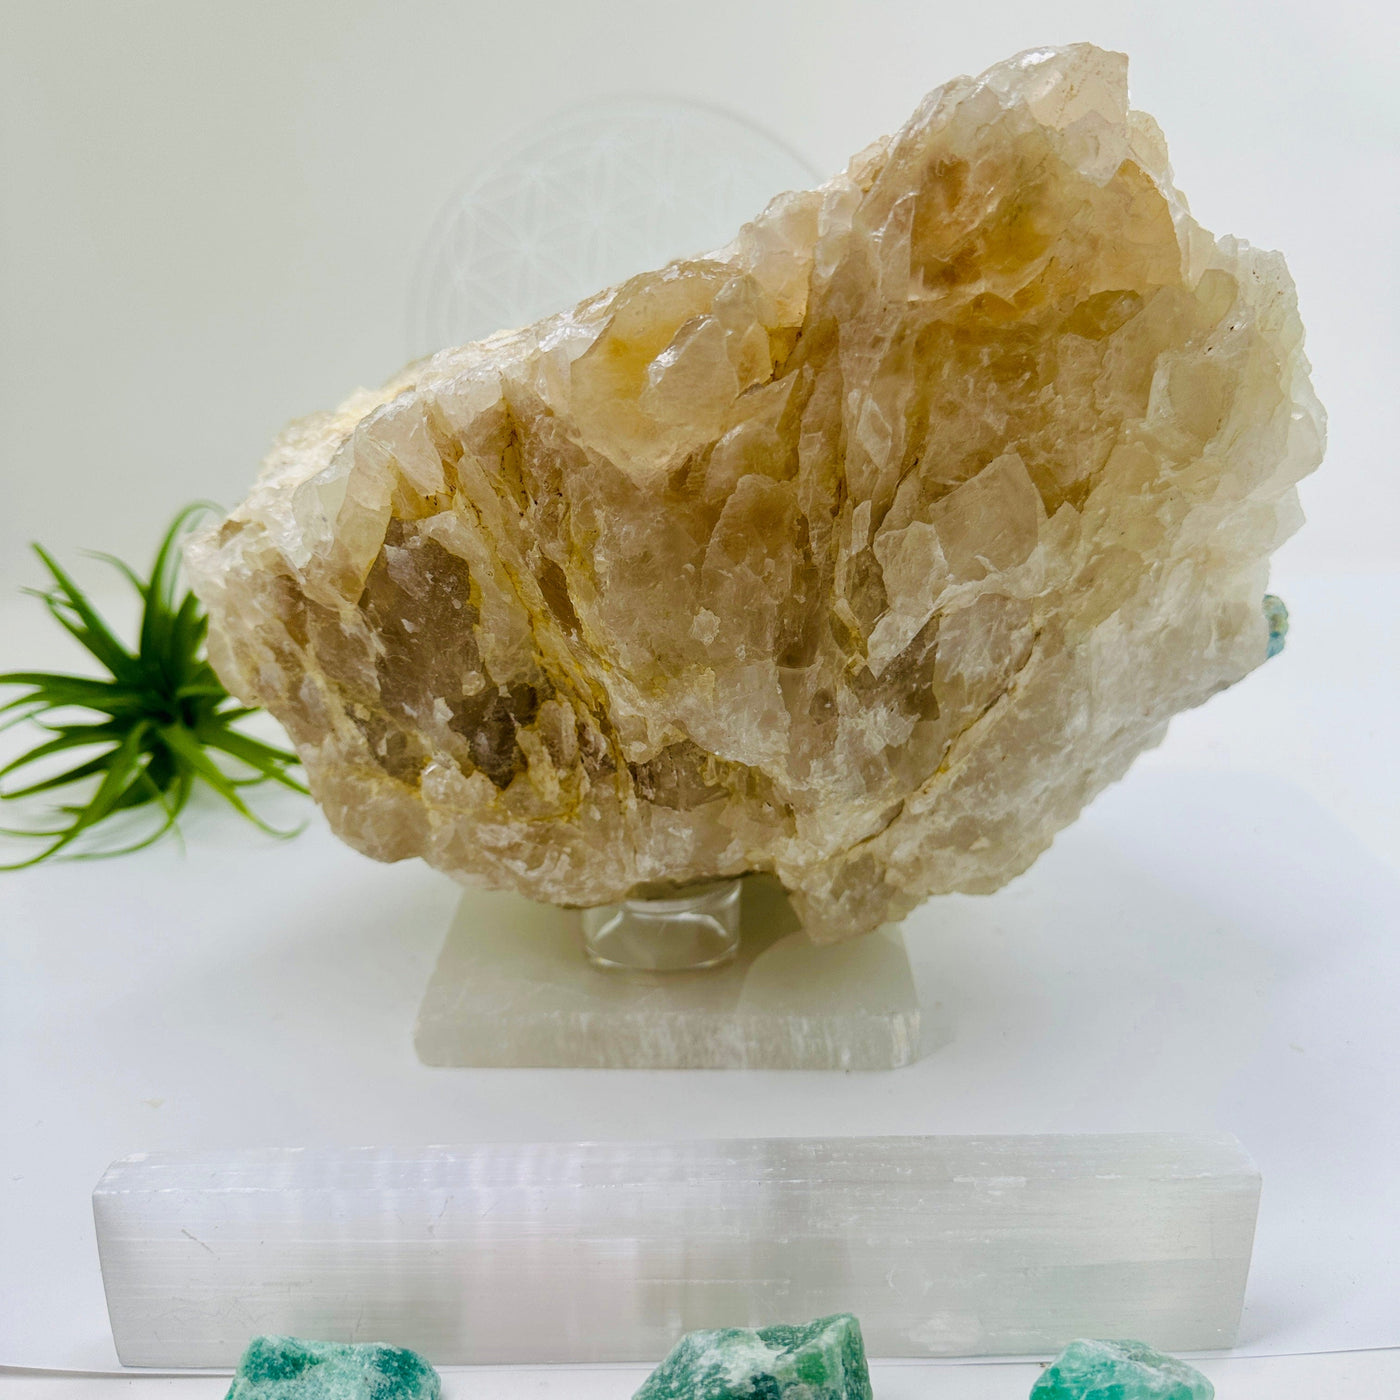 Aquamarine in matrix - extra large aquamarine crystal in natural rough stone side view